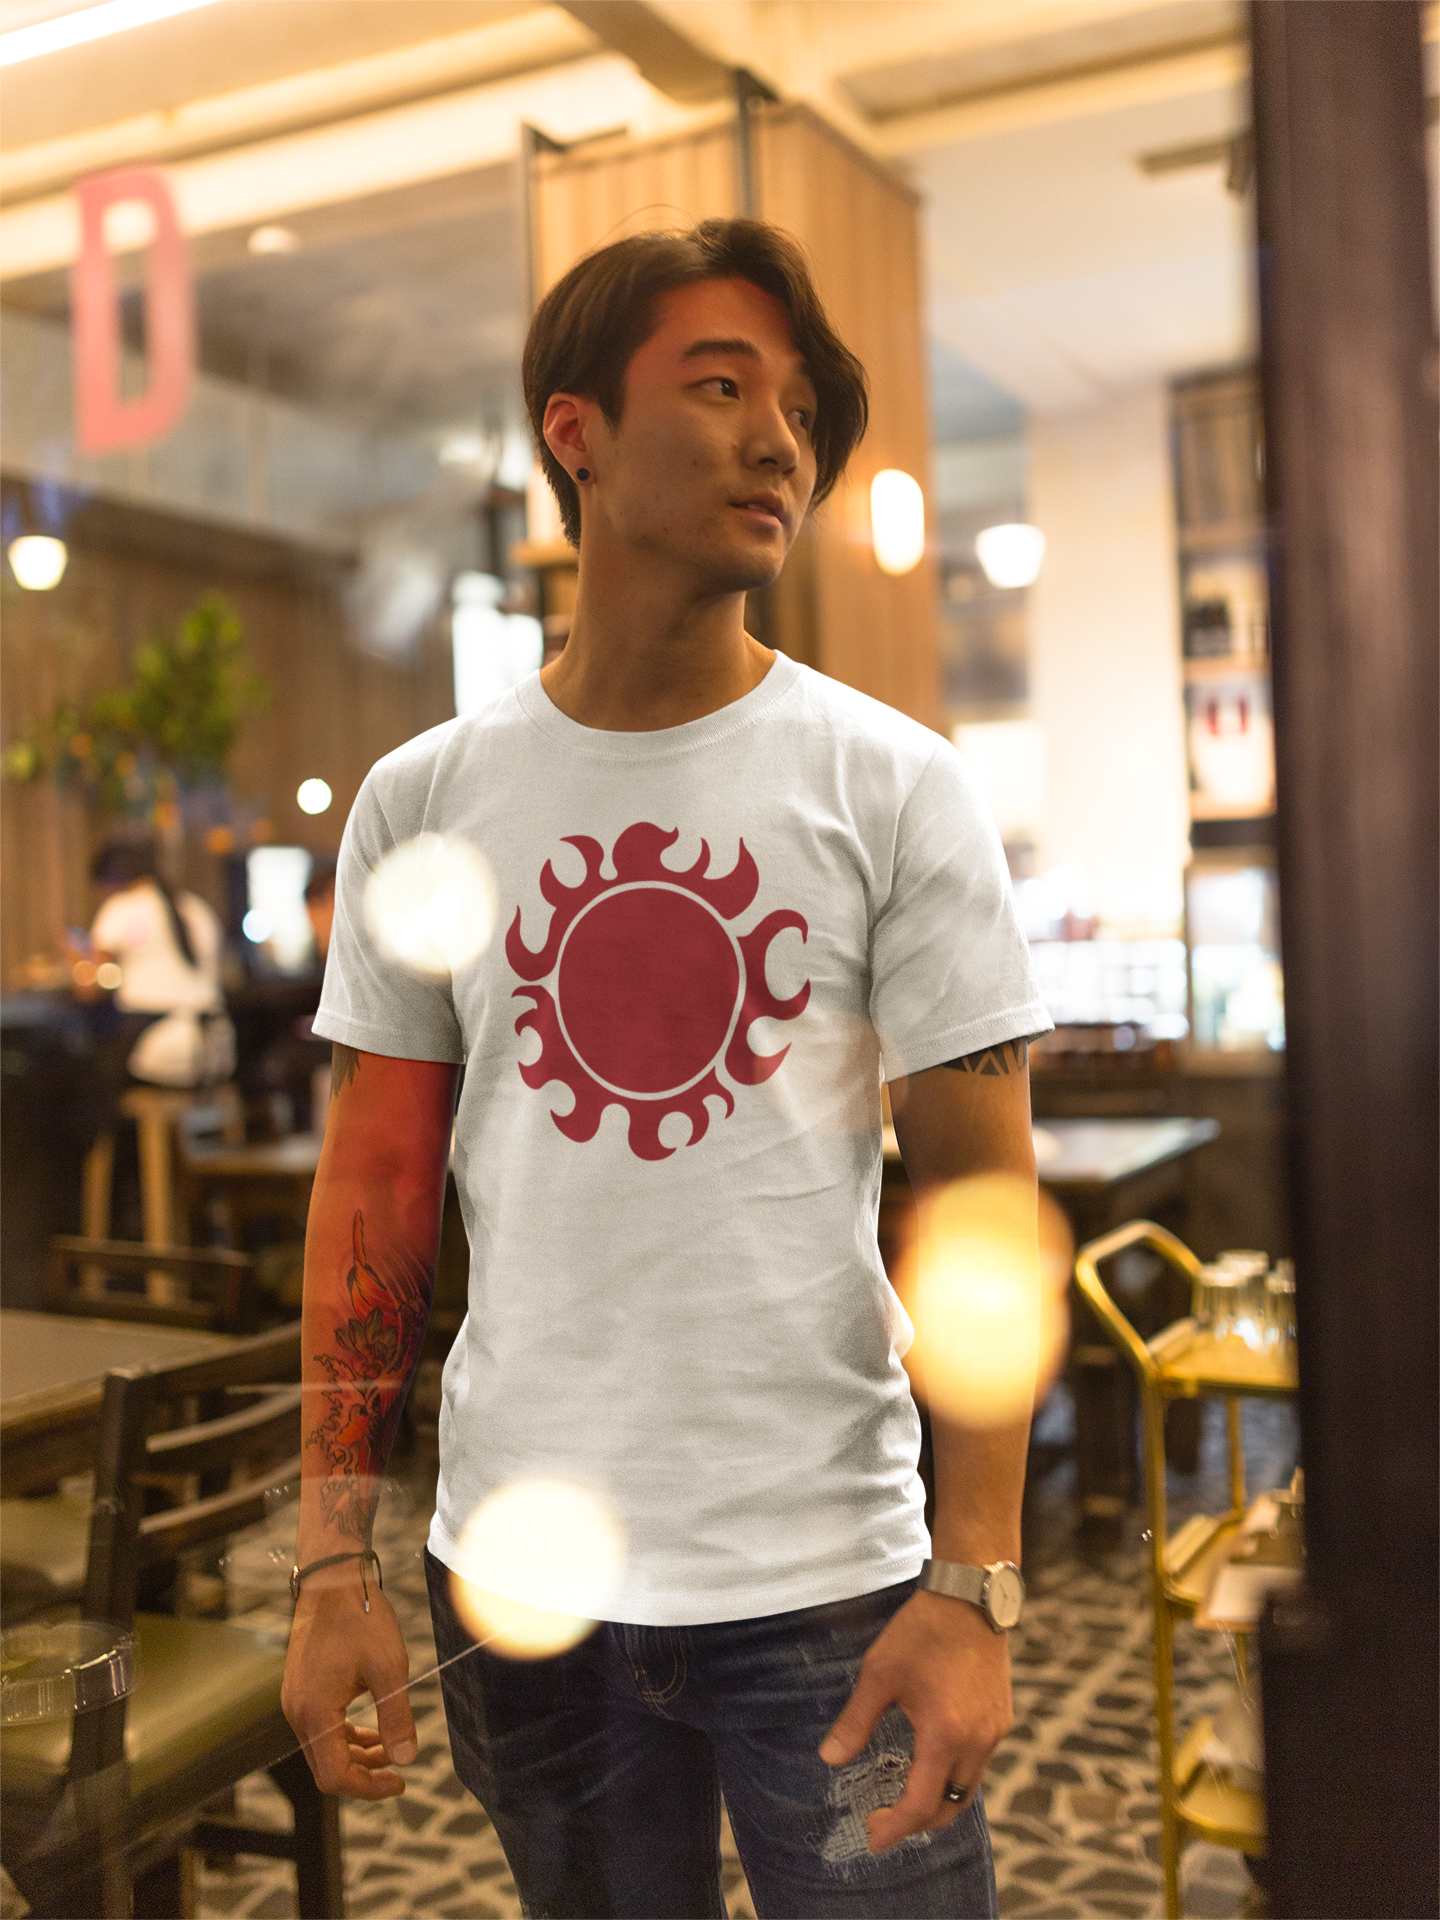 Sun Pirates - Unisex T-Shirt